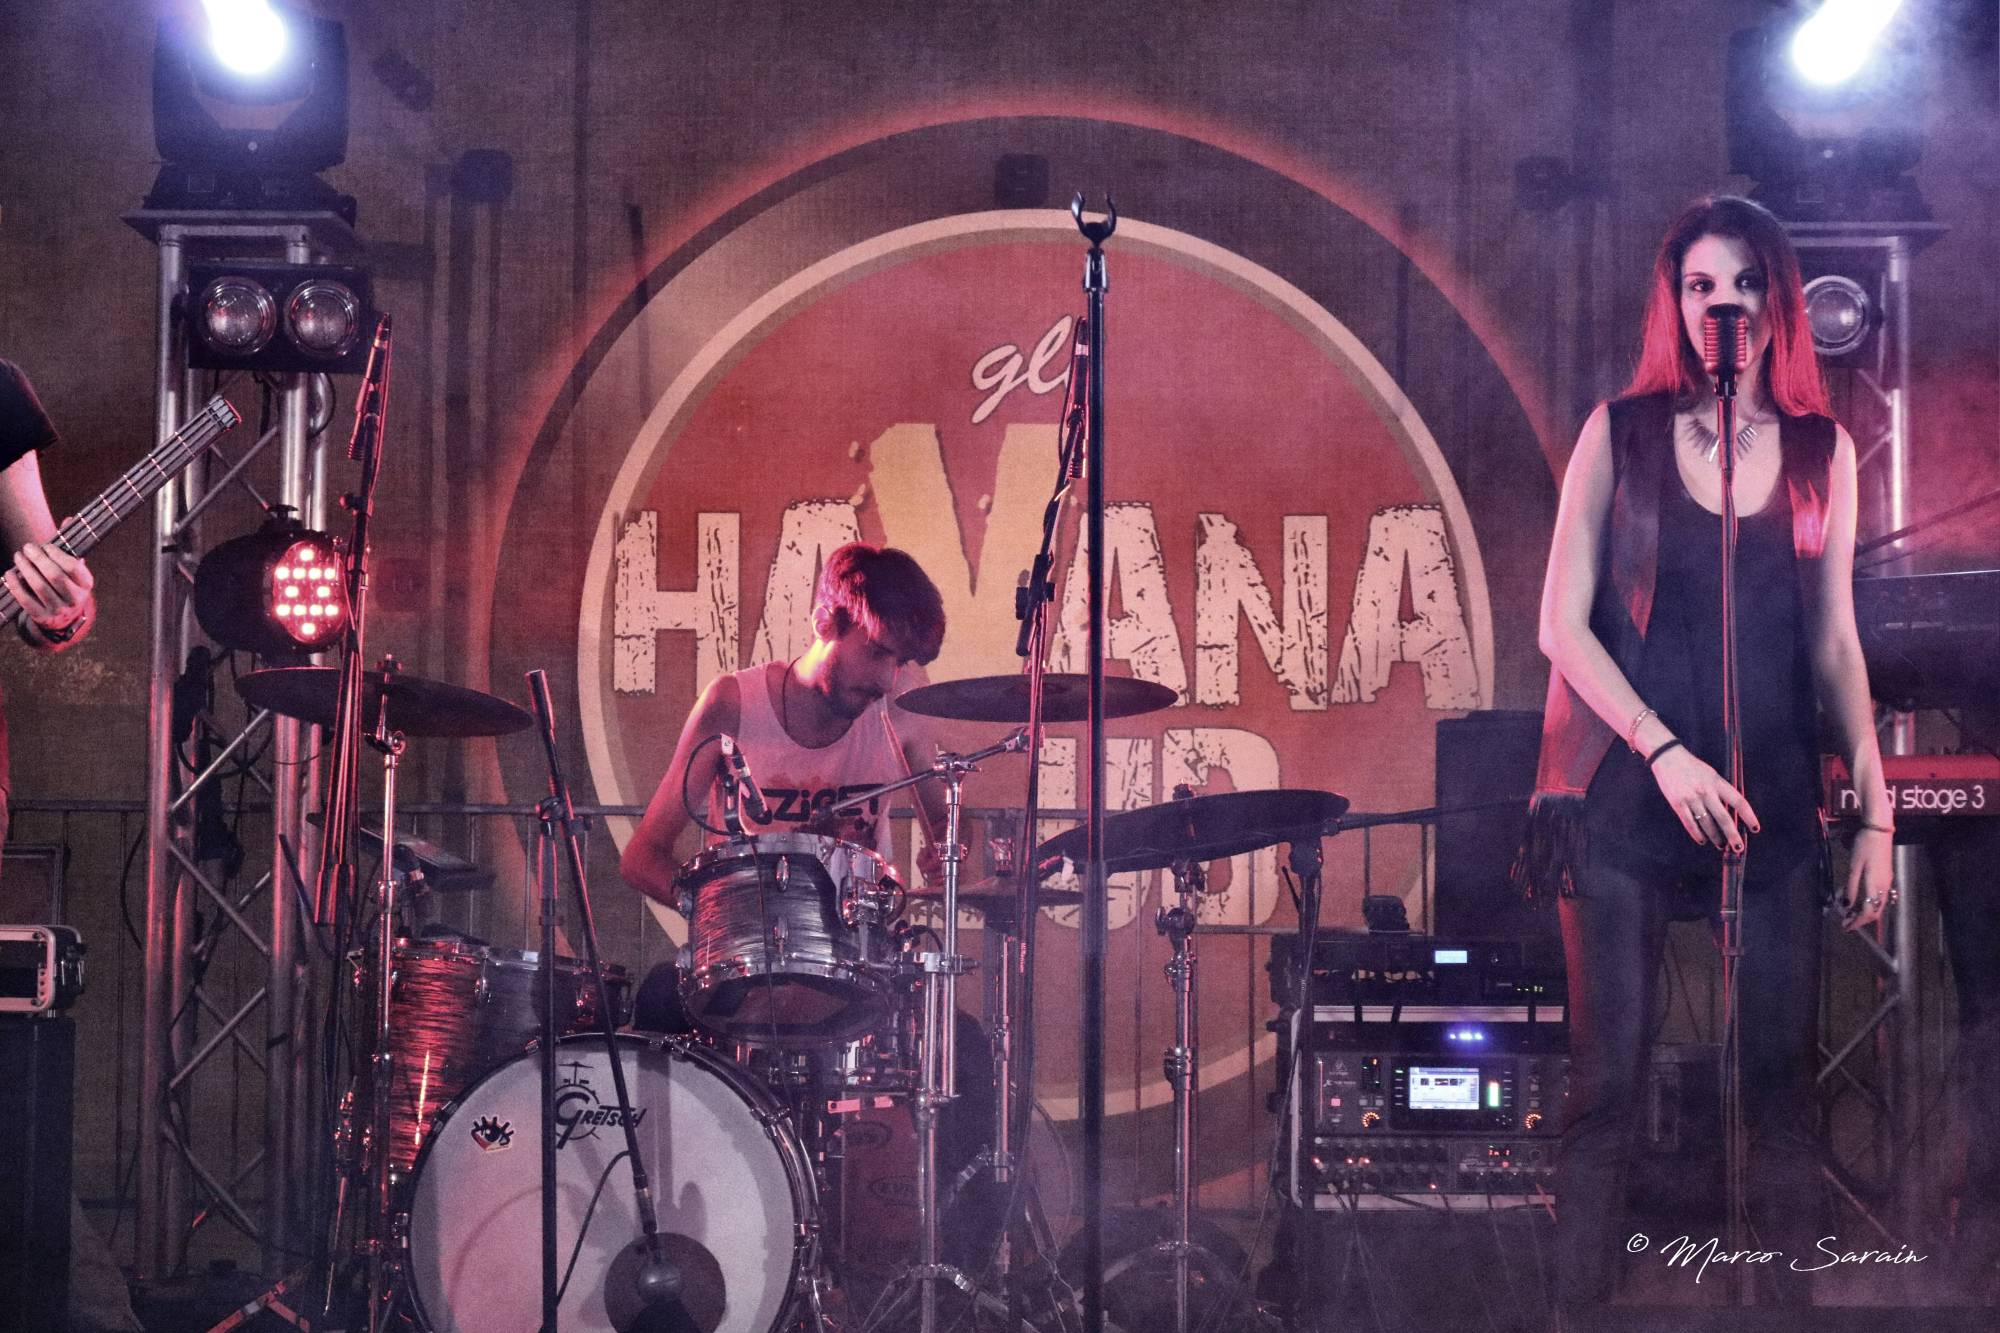 Gli HaVana Club - Tribute Band Vasco Rossi @ FdBirraMestrino